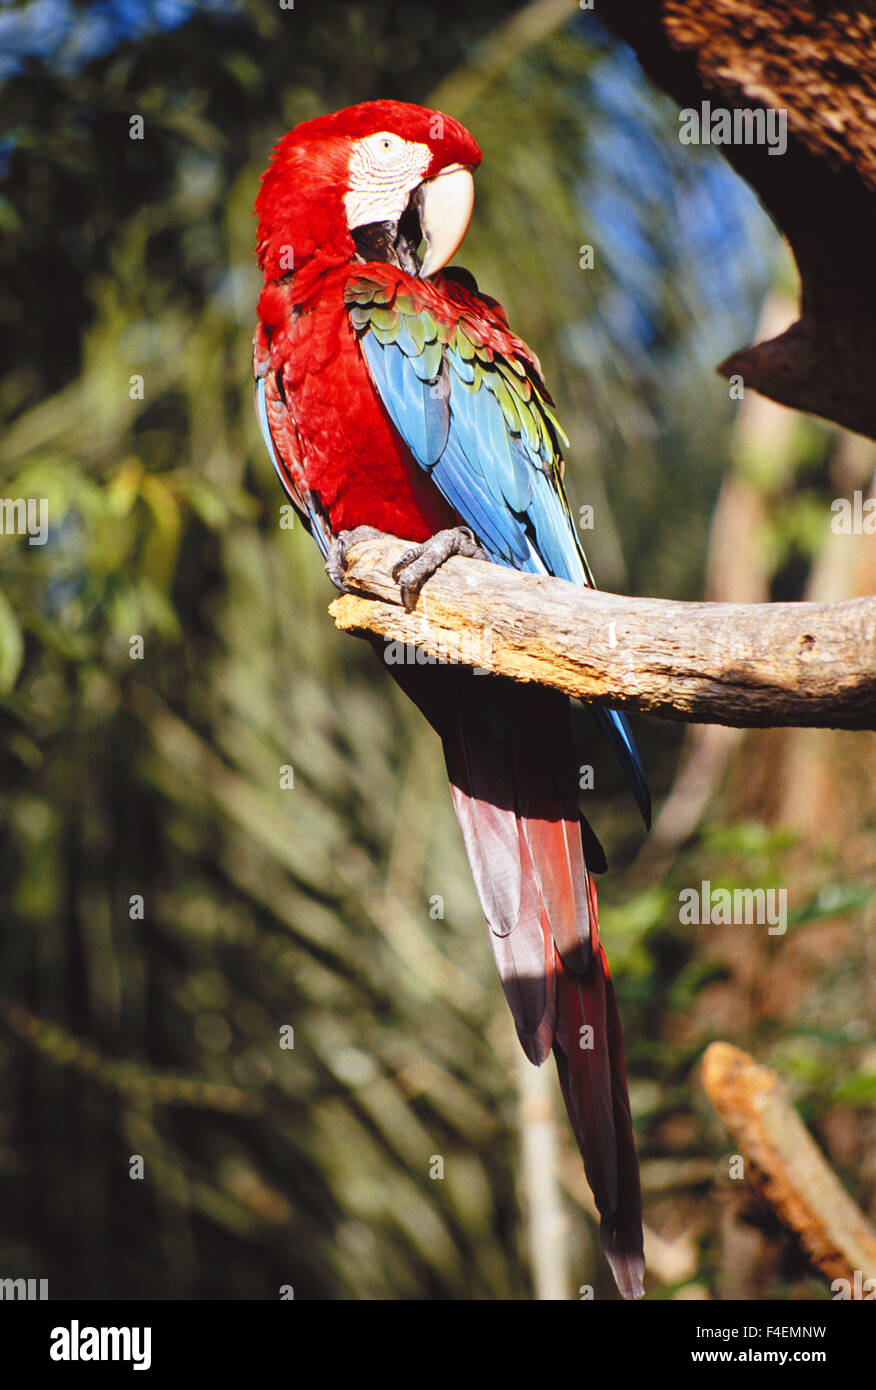 Floride, Parrot perching on branch. Tailles disponibles (grand format) Banque D'Images